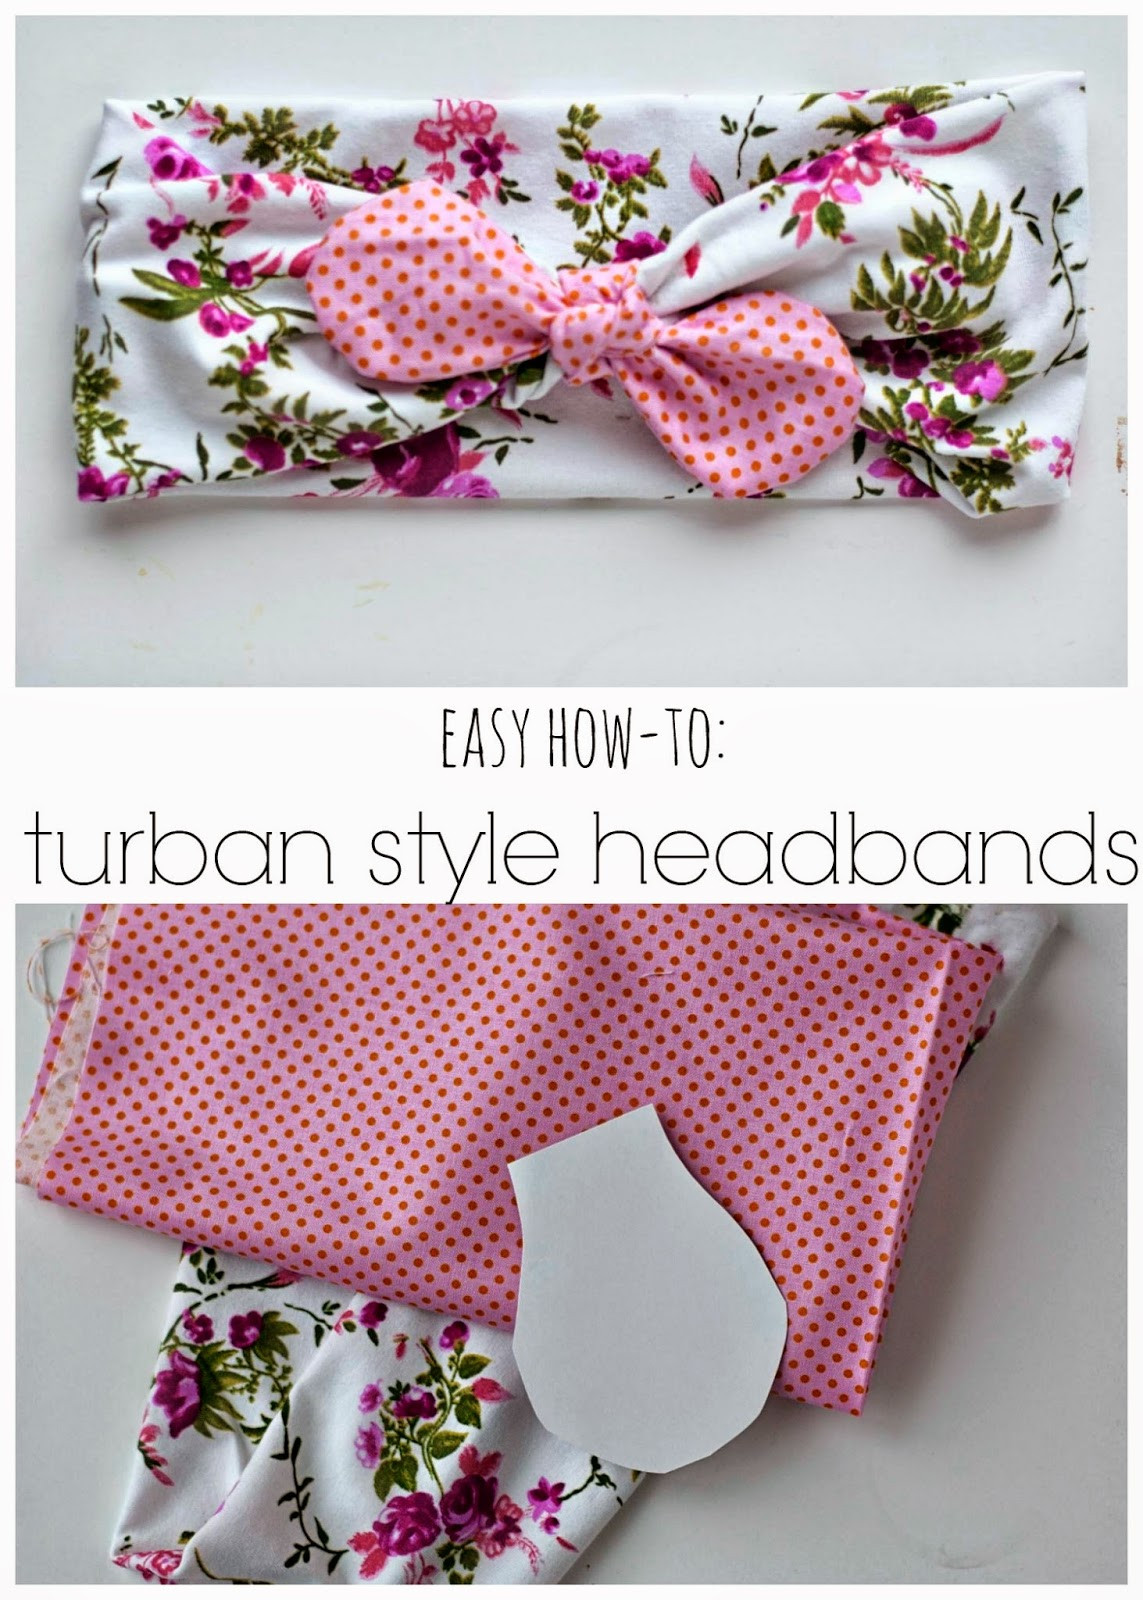 DIY Baby Turban Headbands
 DIY Turban Style Headband Tutorial